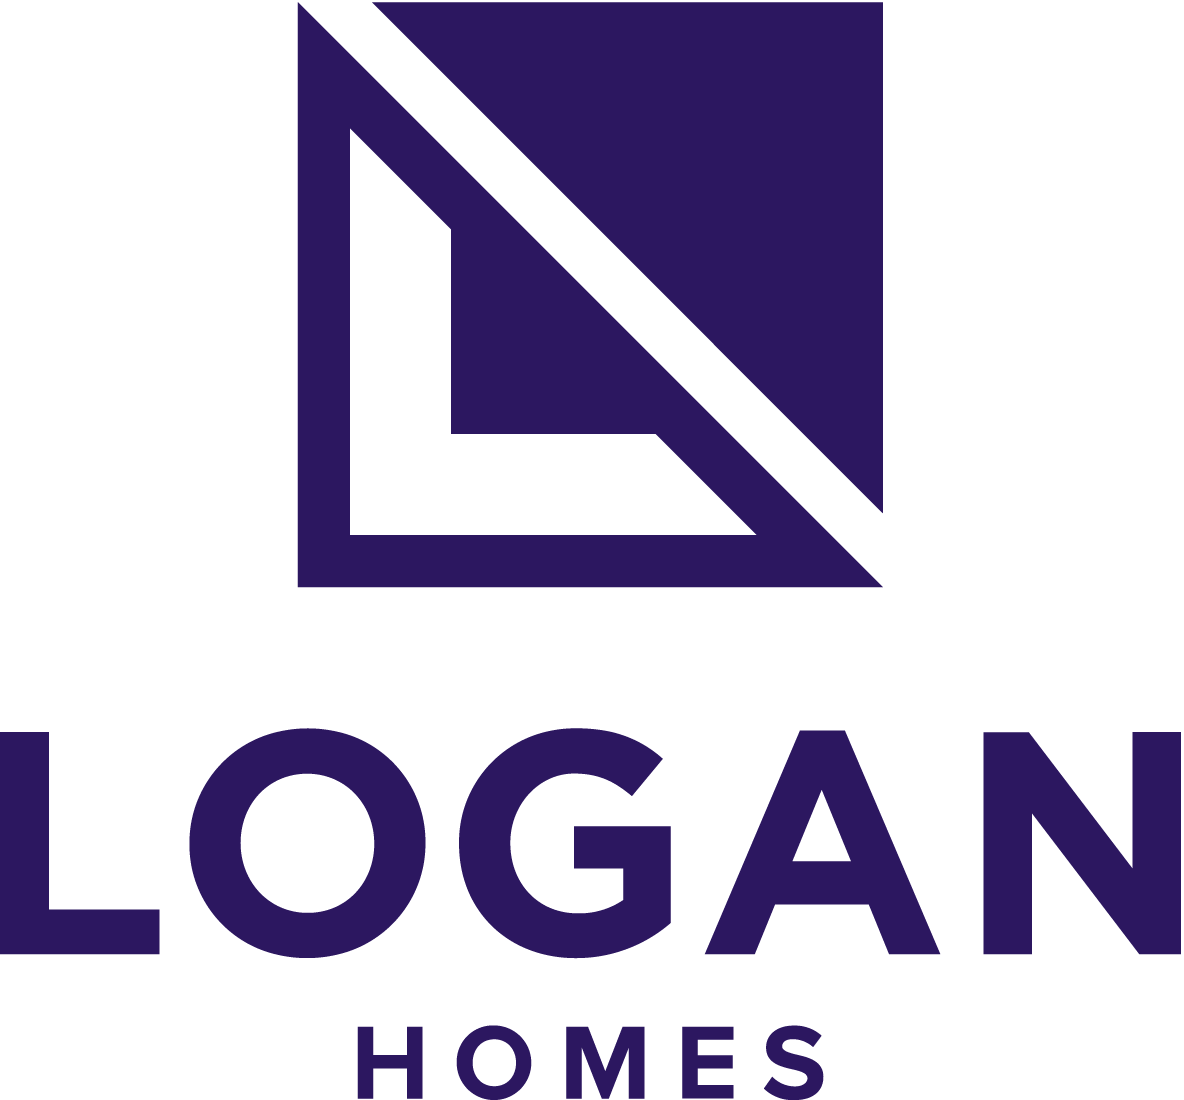 Logan Homes Logo